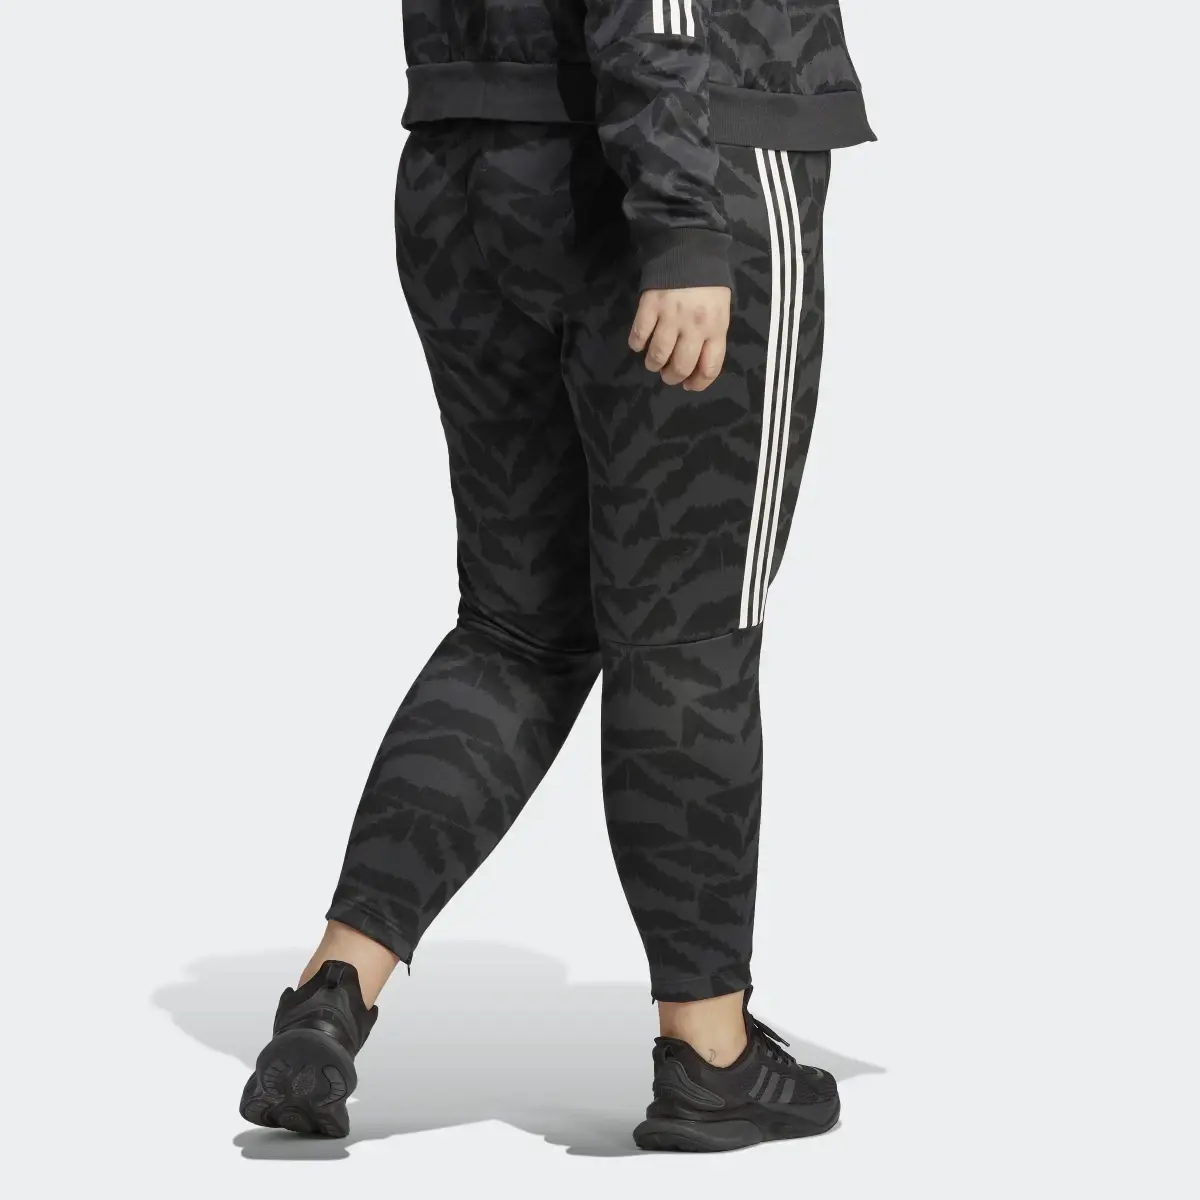 Adidas Track pants Tiro Suit Up Lifestyle (Curvy). 2